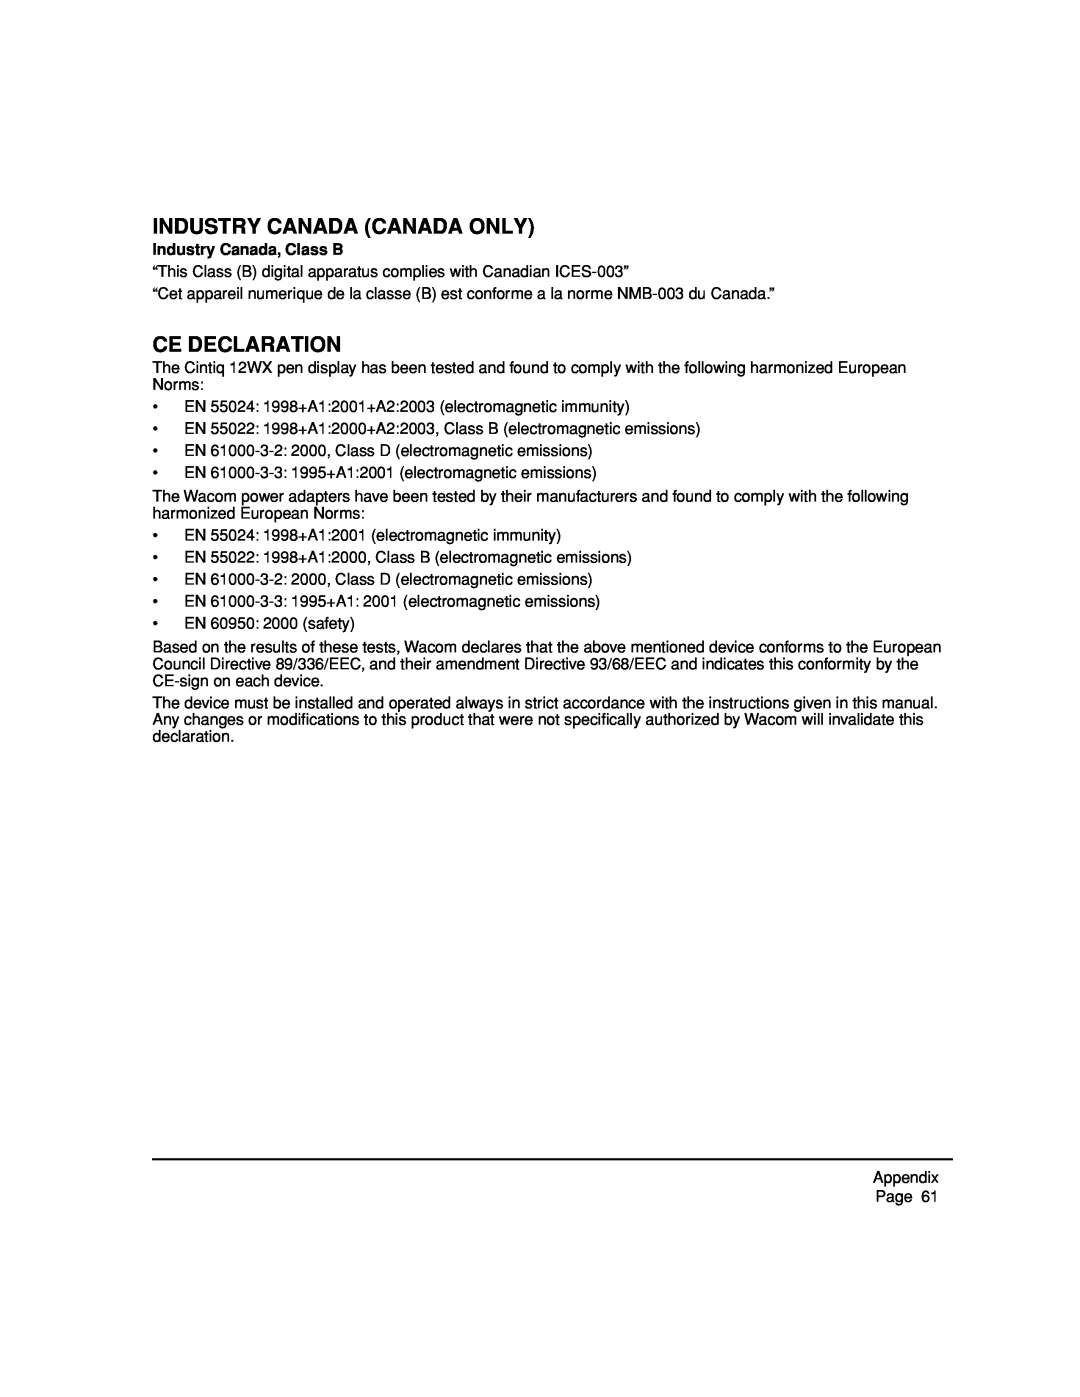 Wacom DTZ-1200W, 12WX manual Industry Canada Canada Only, Ce Declaration, Industry Canada, Class B 